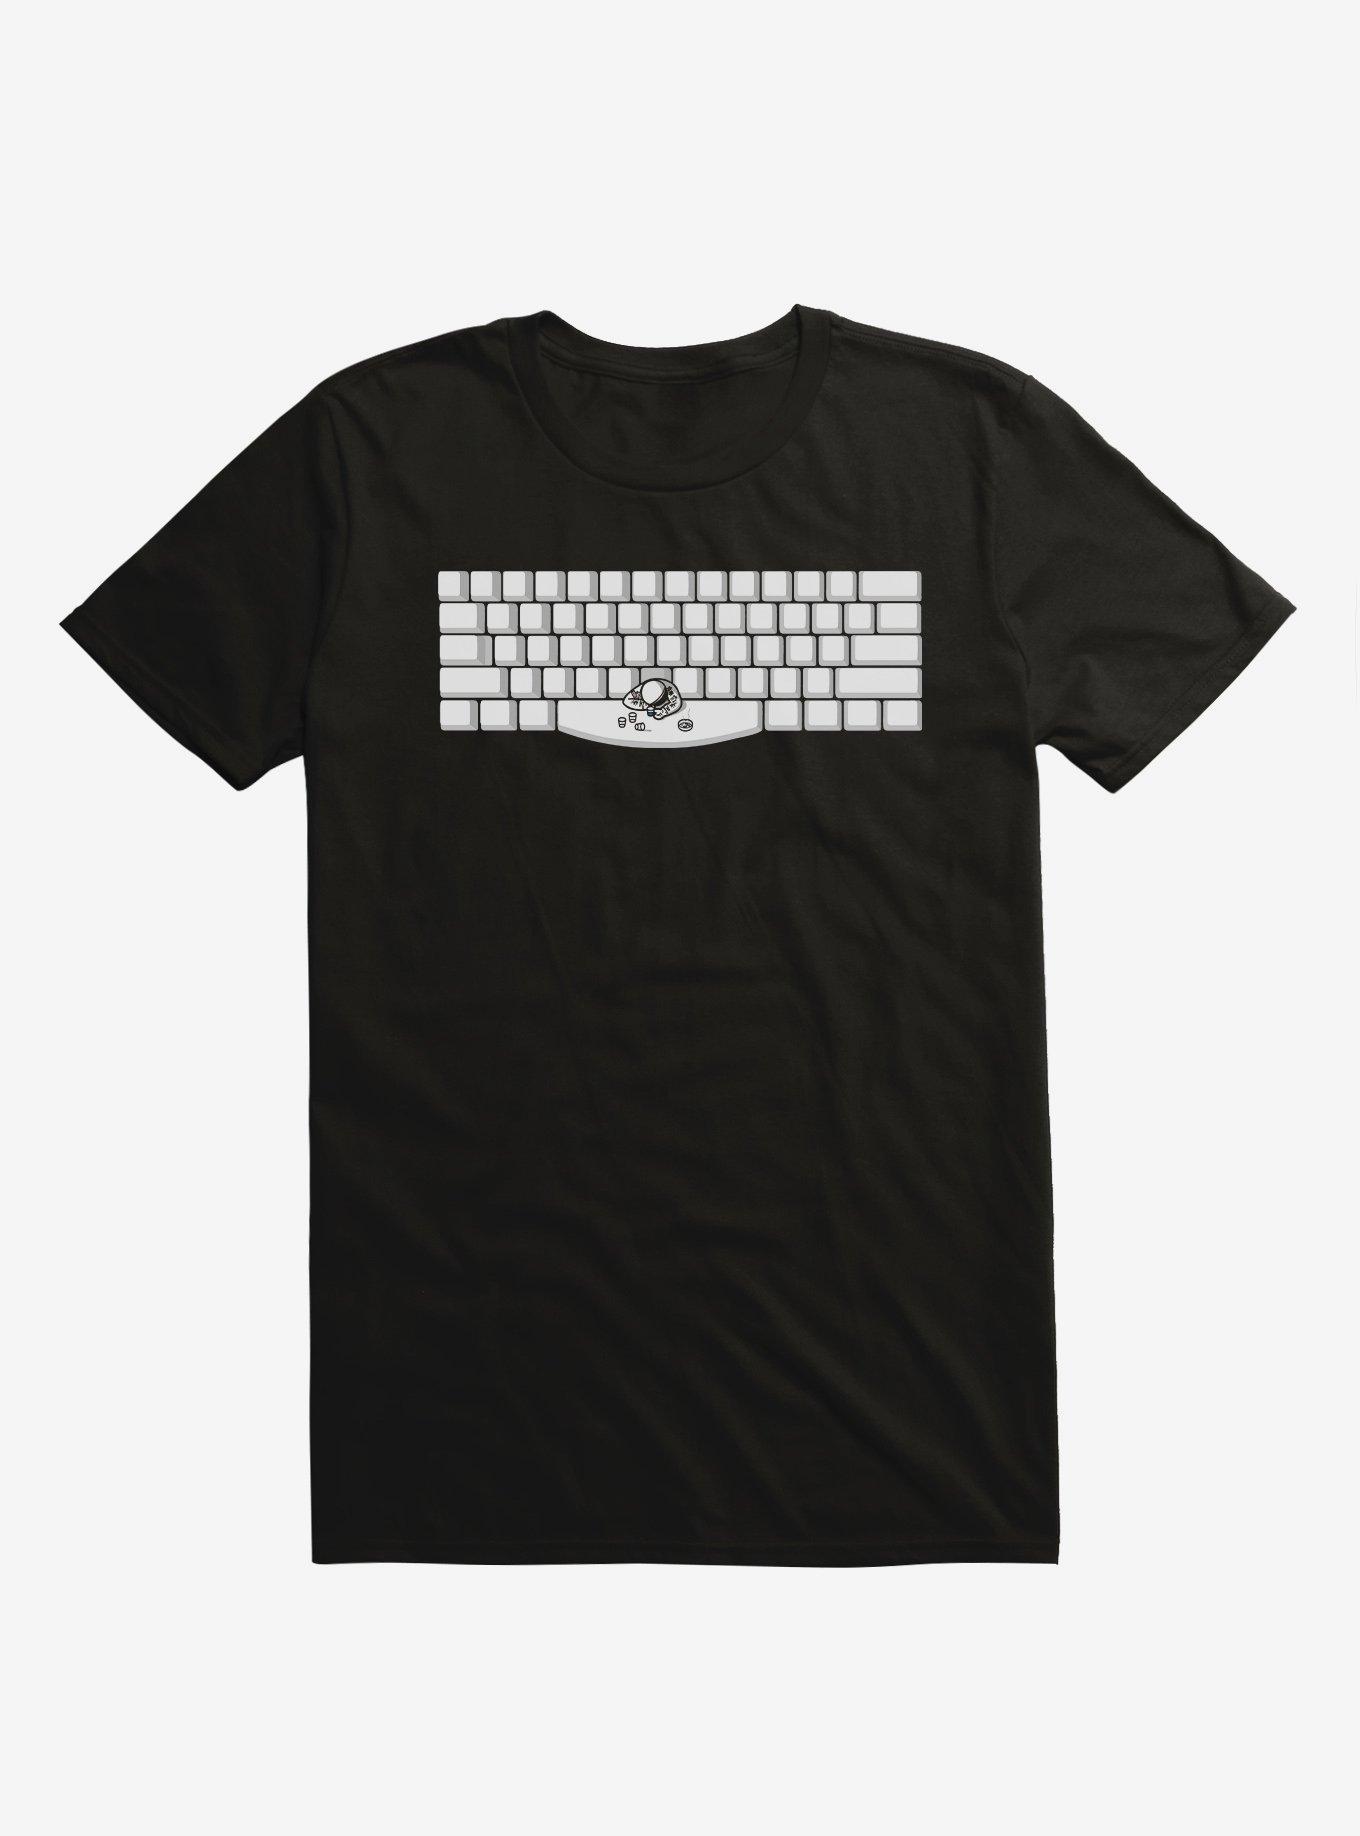 Spacebar Astronaut Keyboard Black T-Shirt, BLACK, hi-res